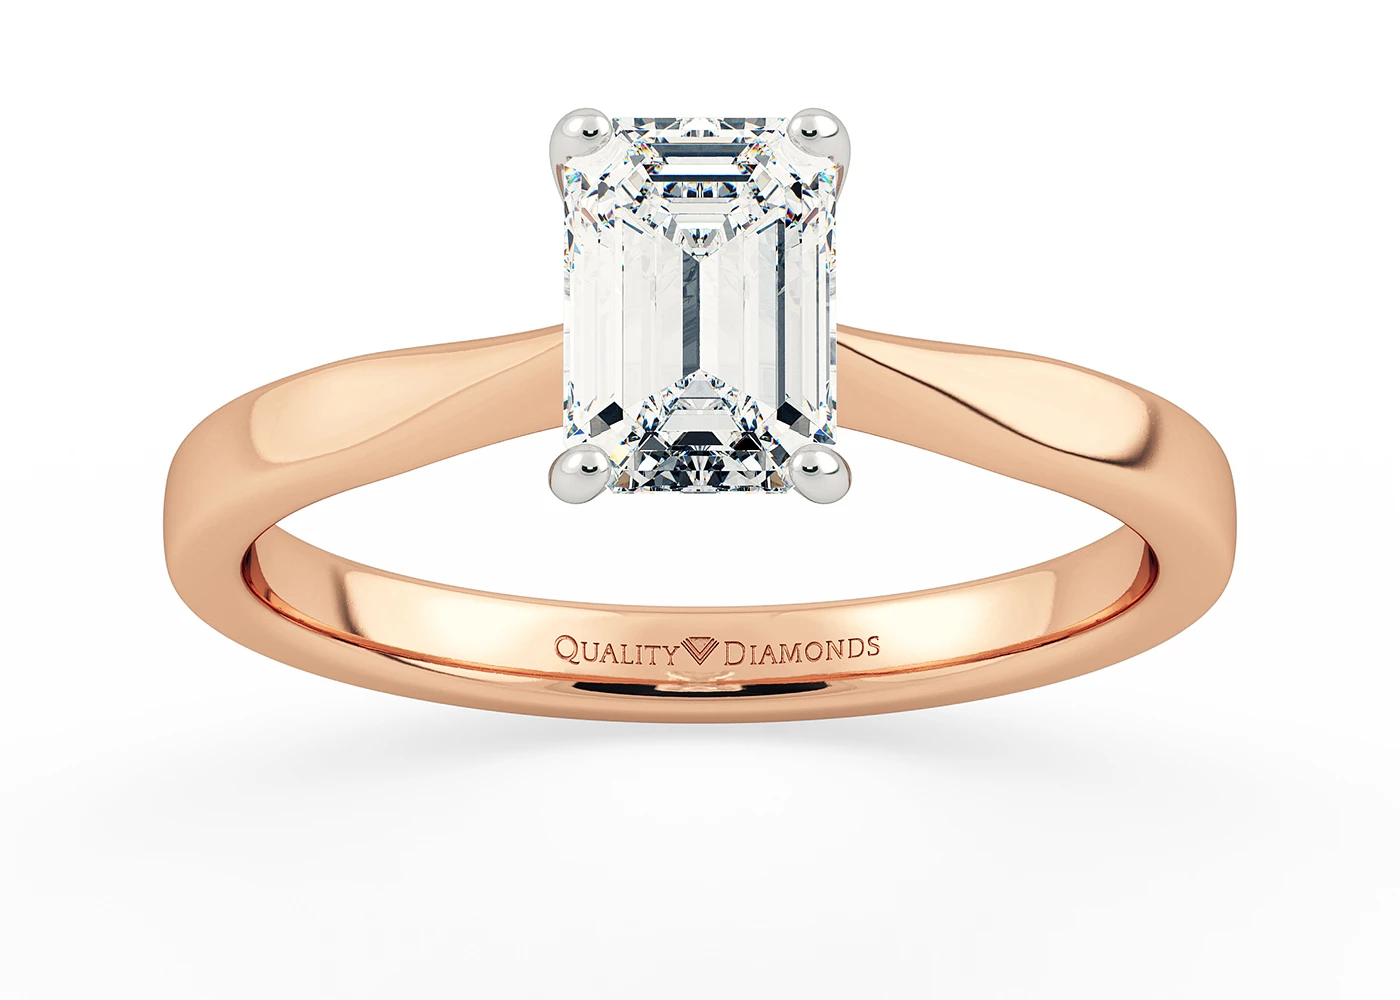 Emerald Beau Diamond Ring in 9K Rose Gold